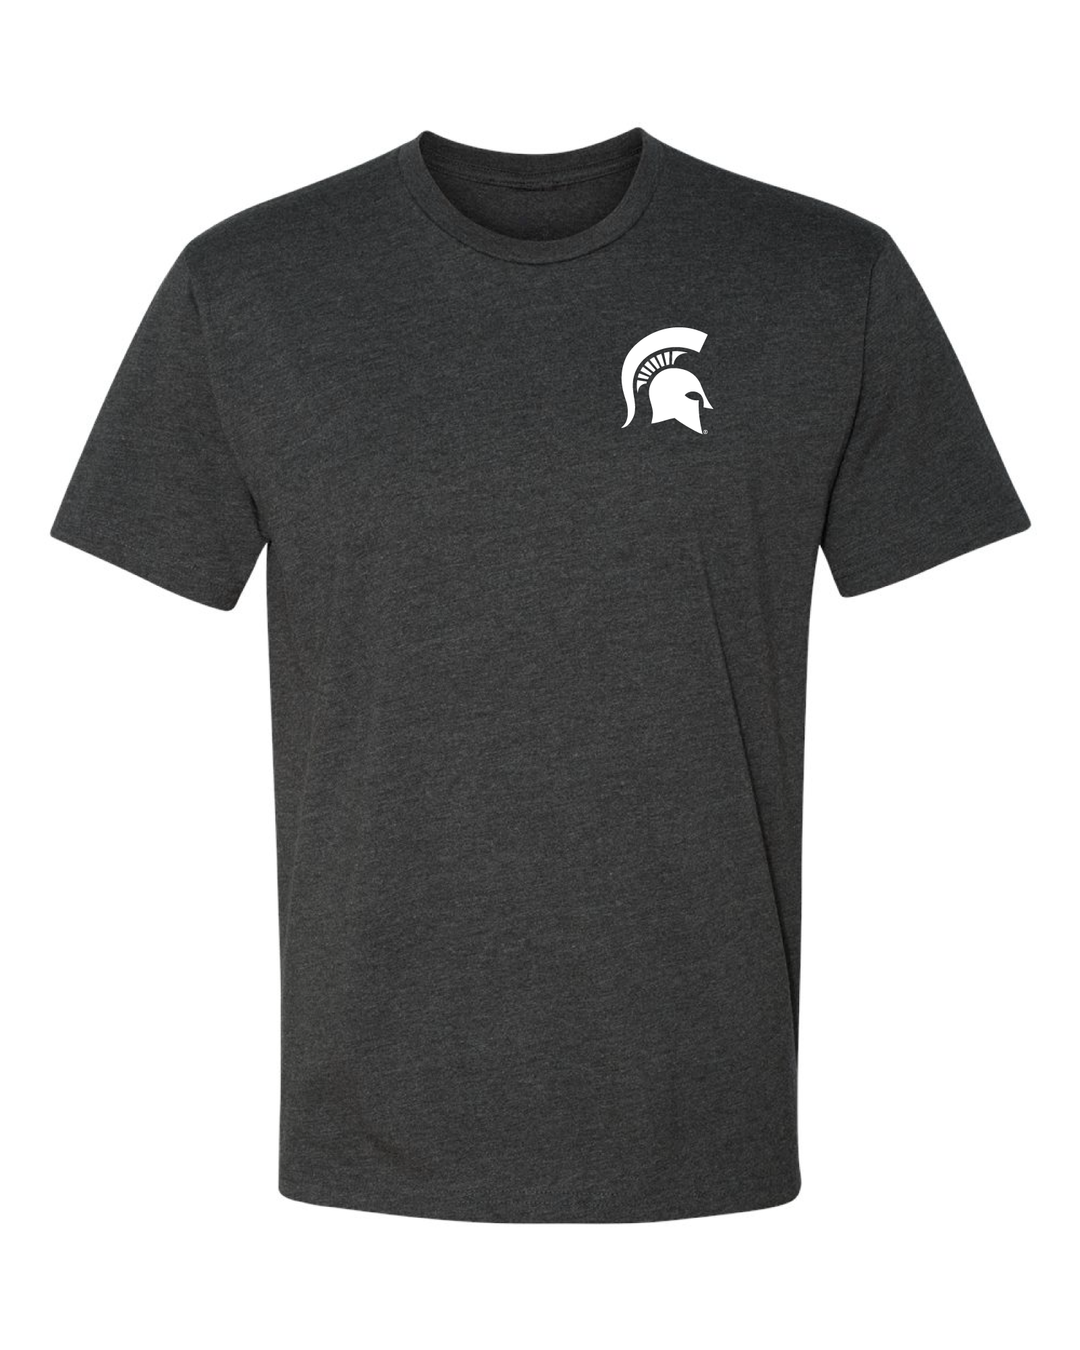 Dark Grey Michigan State Shirt with Spartan Helmet logo from Nudge Printing